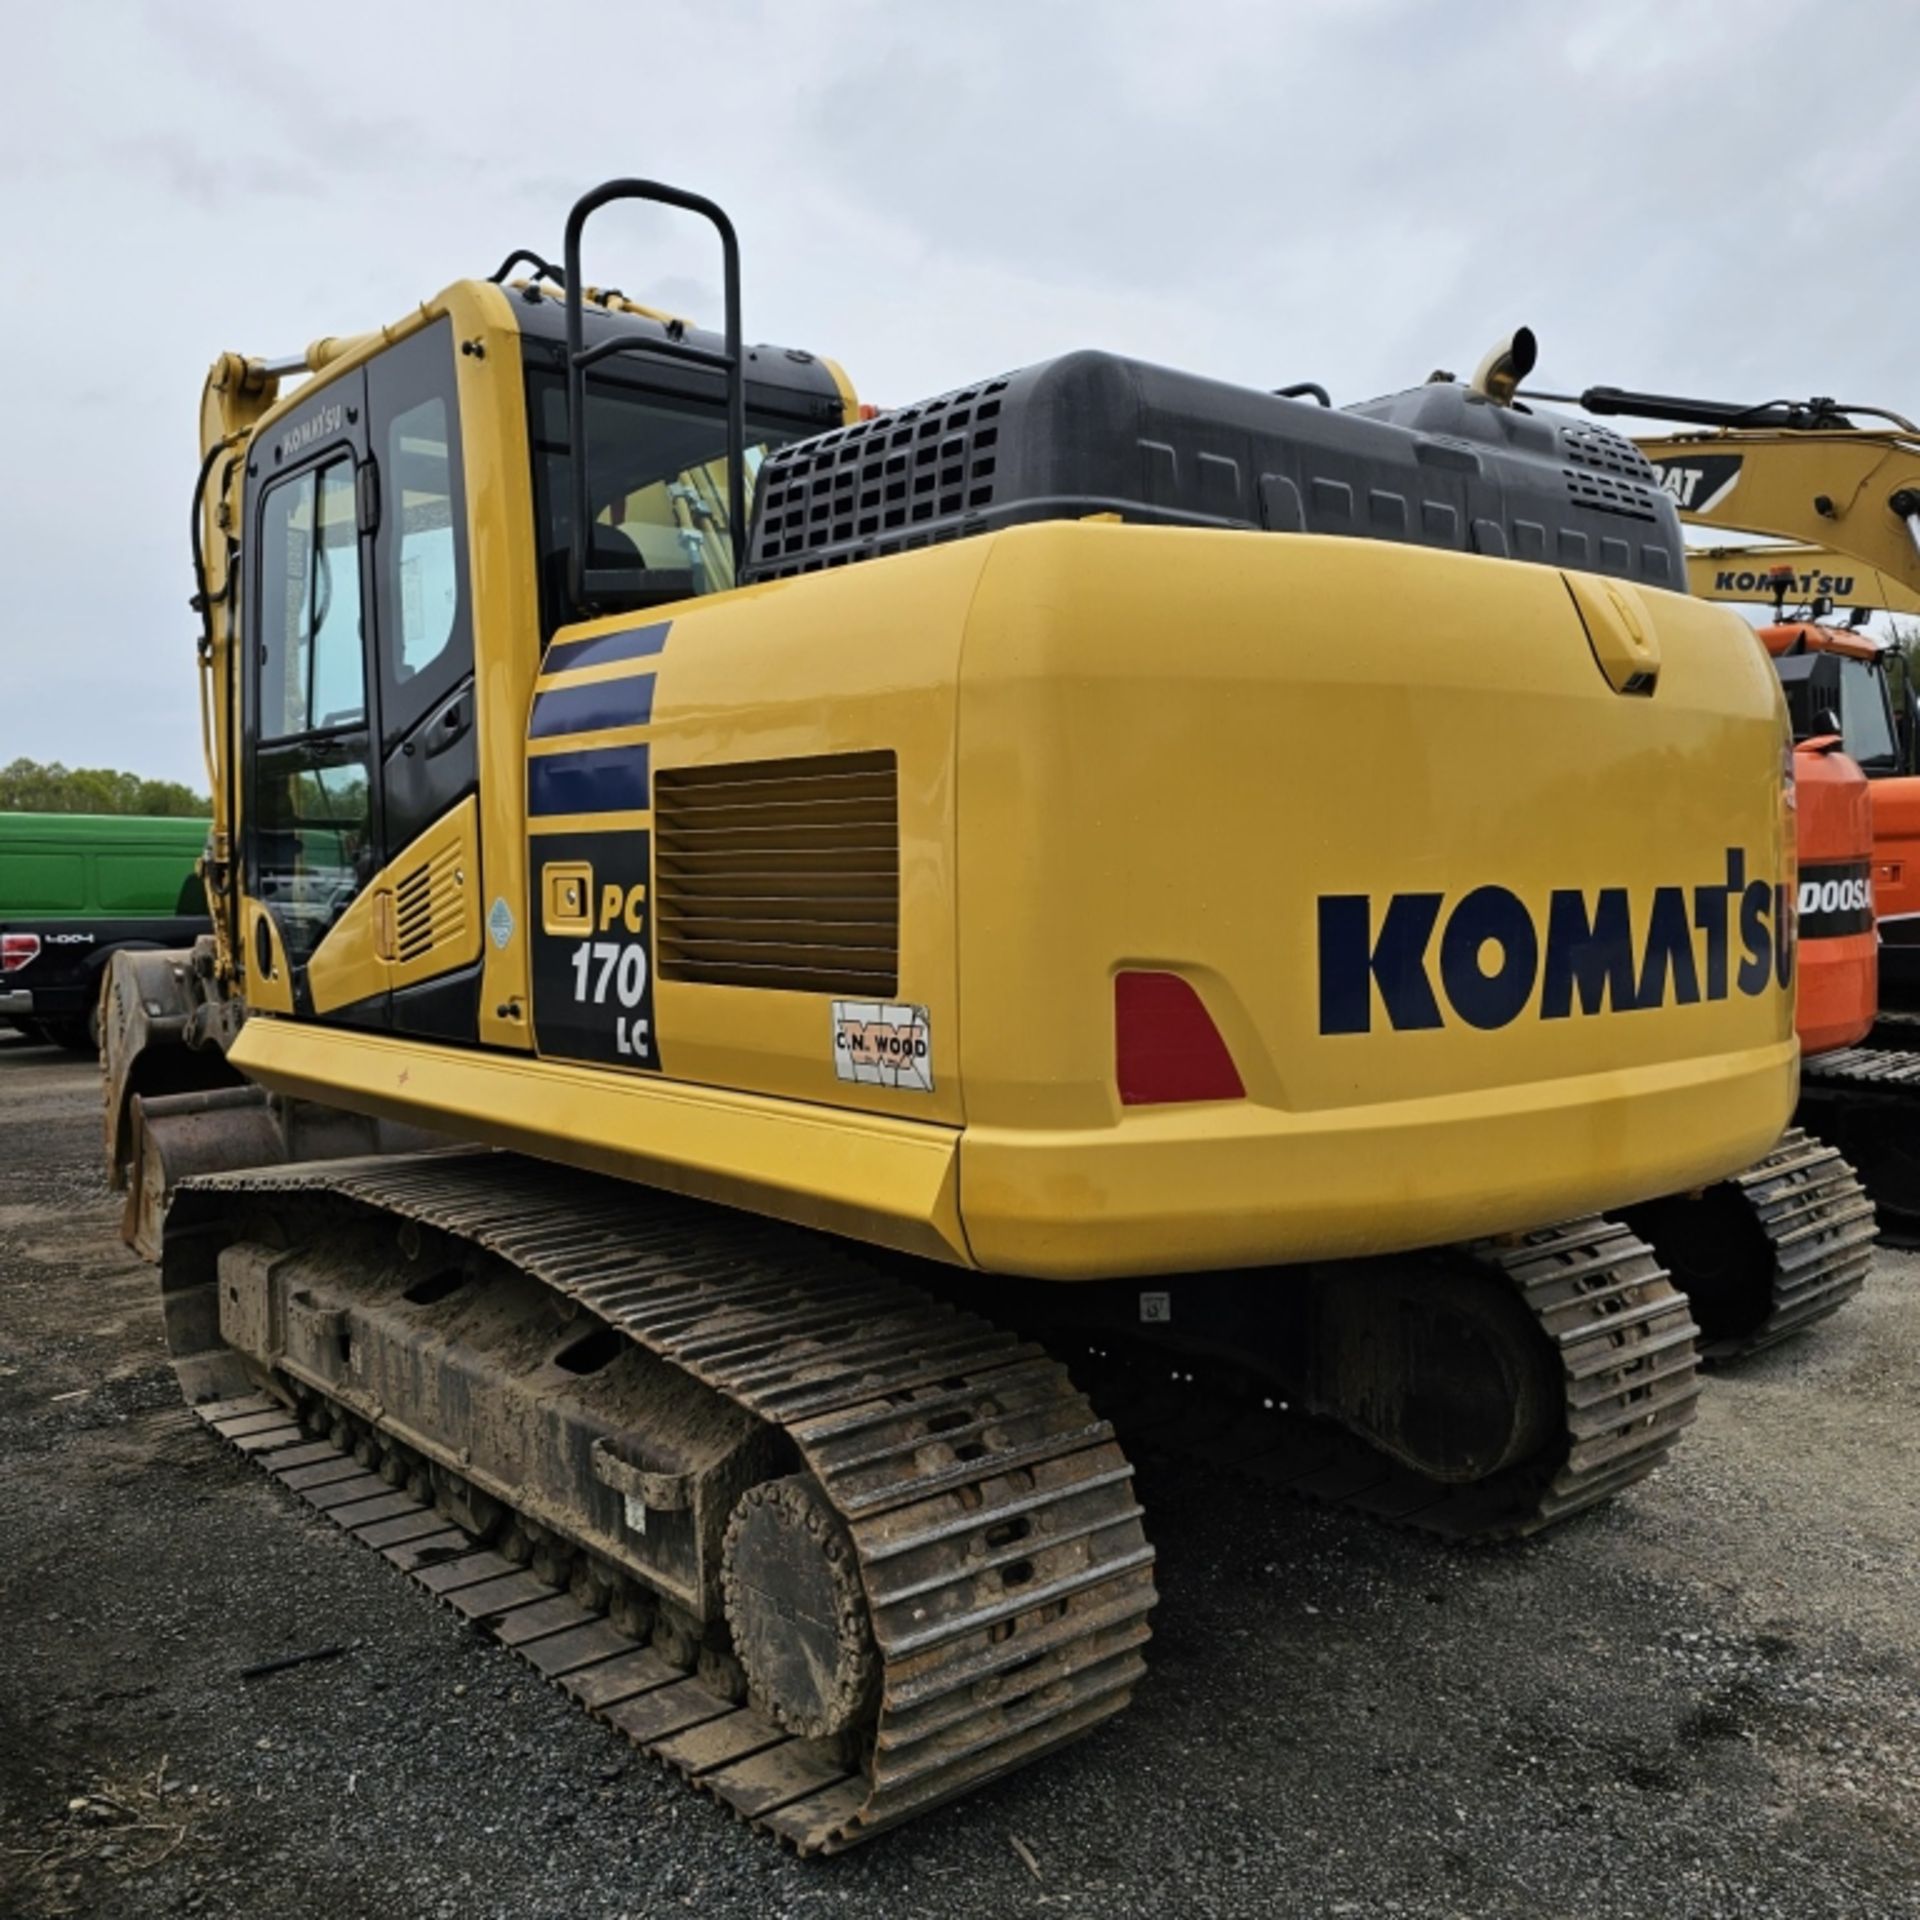 2020 Komatsu Pc170lc-11 Excavator - Image 11 of 16